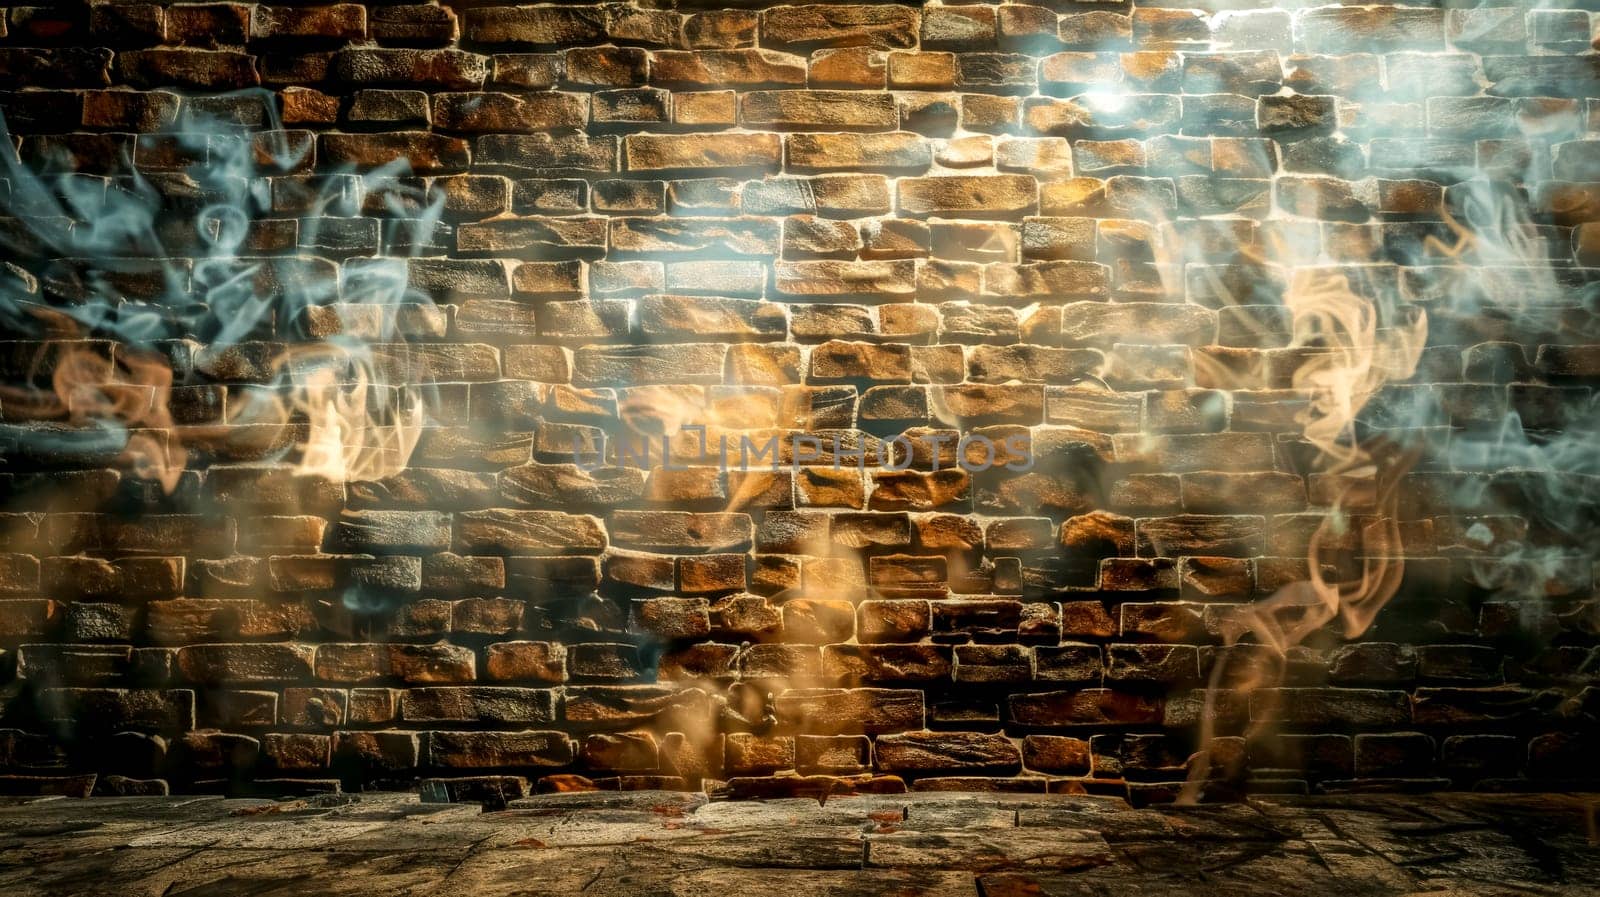 Whimsical smoke dance against rustic brick wall by Edophoto